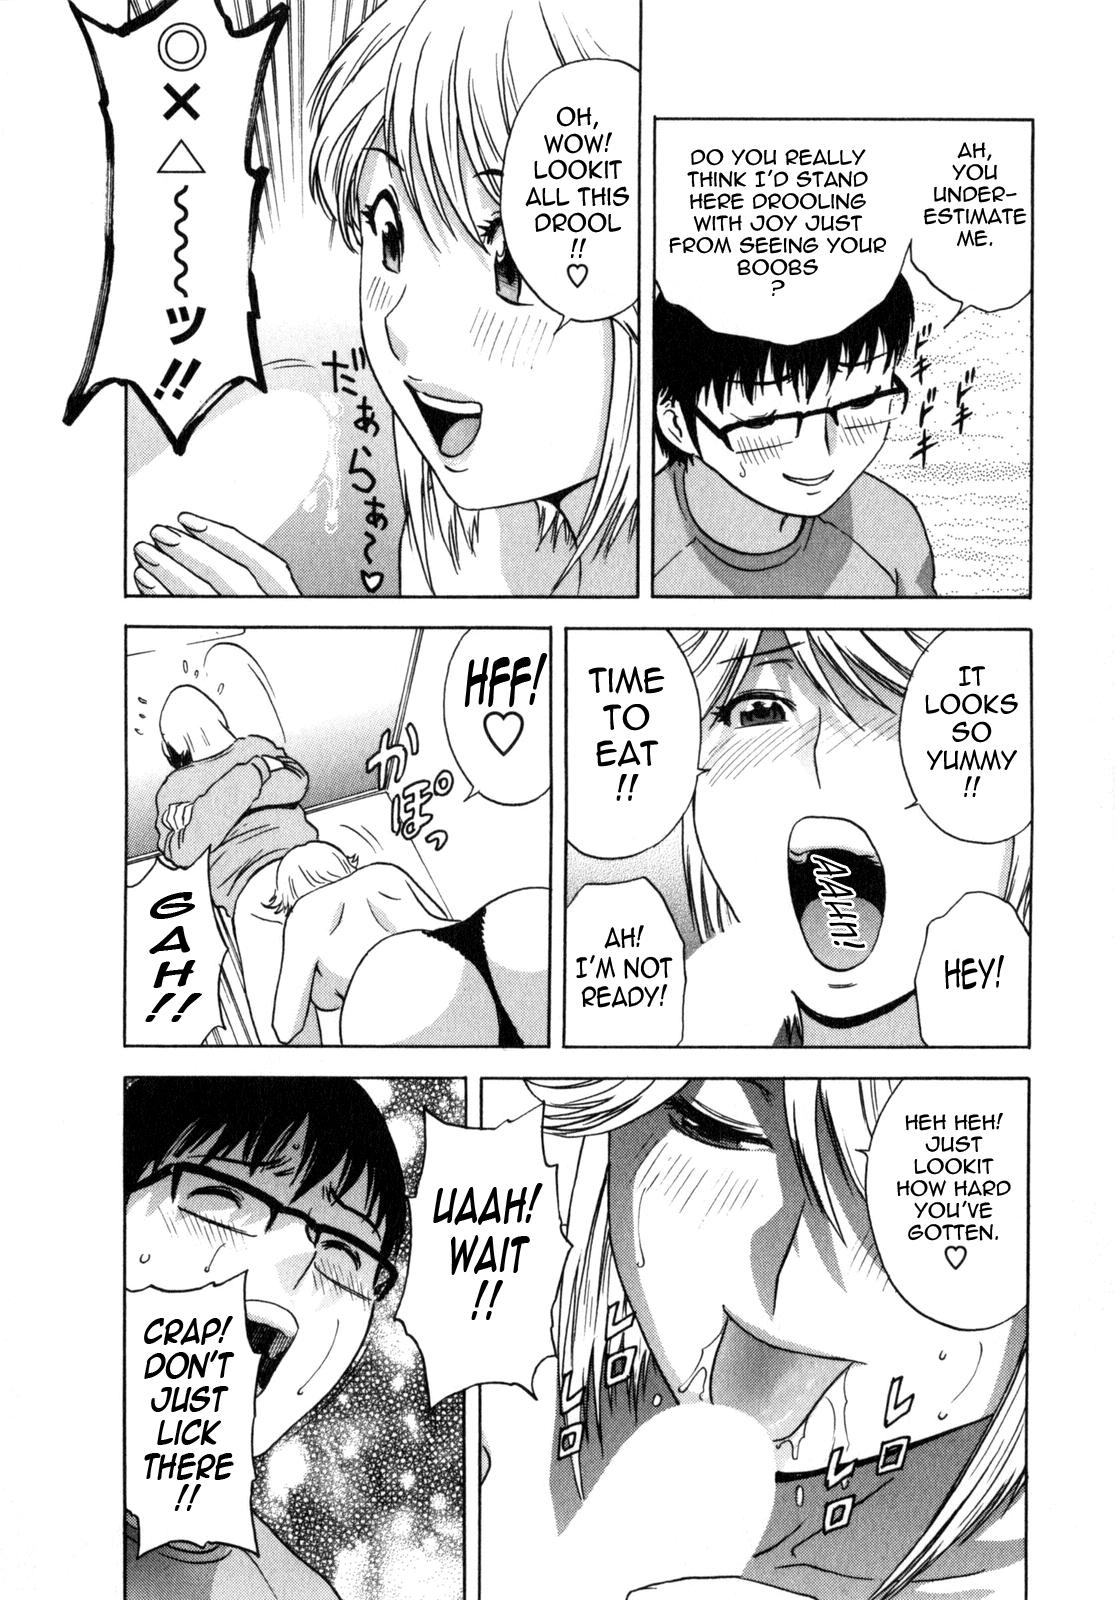 [Hidemaru] Life with Married Women Just Like a Manga 1 - Ch. 1-3 [English] {Tadanohito} 33